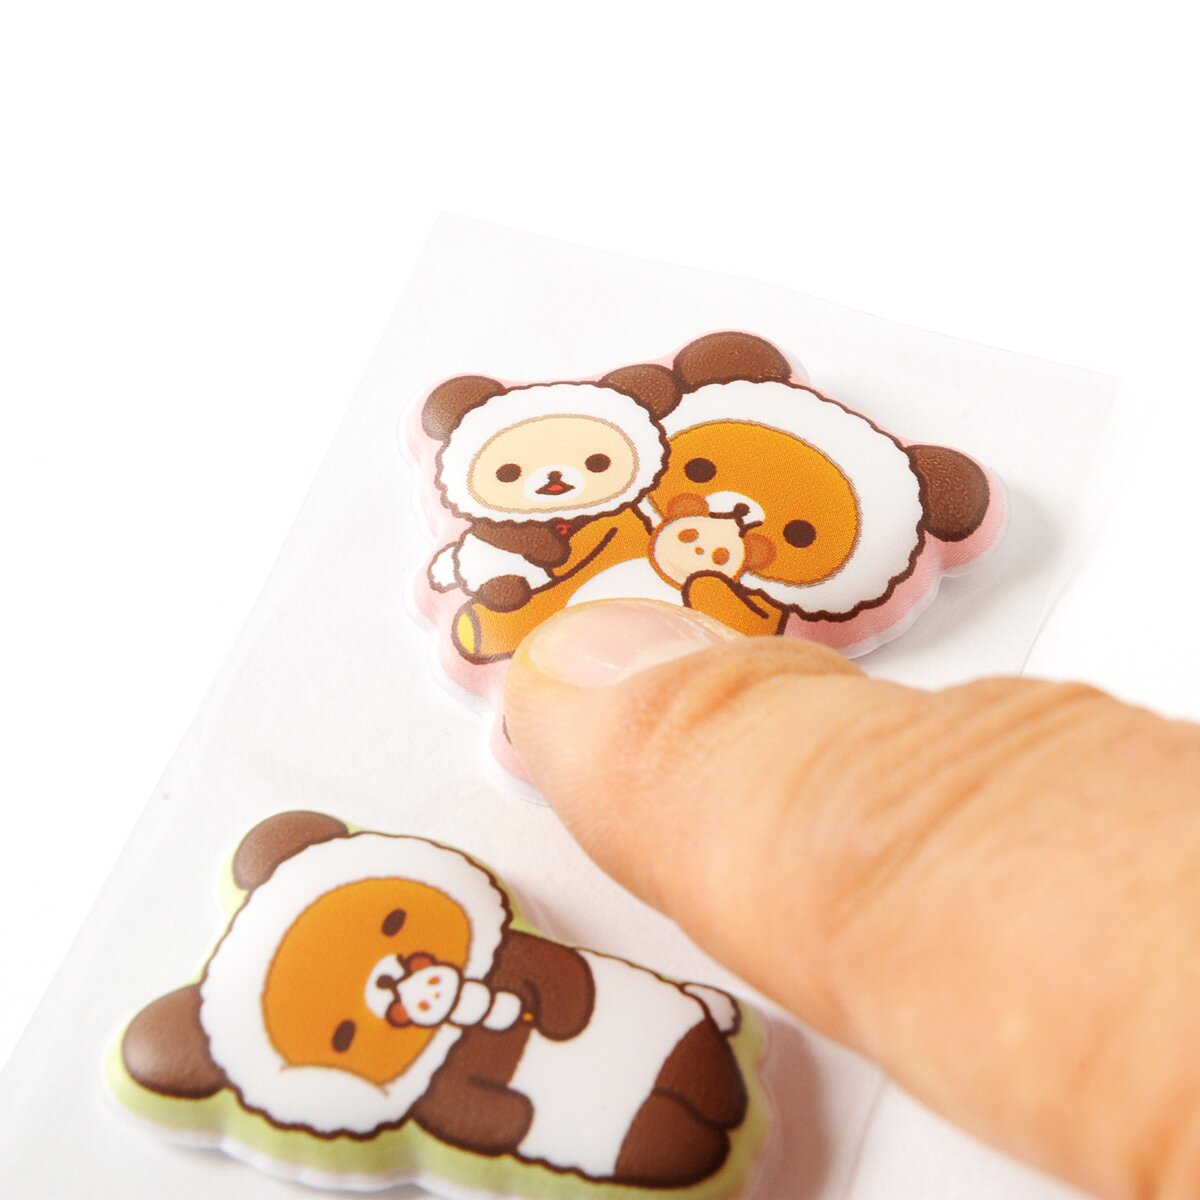 Rilakkuma Panda de Goron Stickers